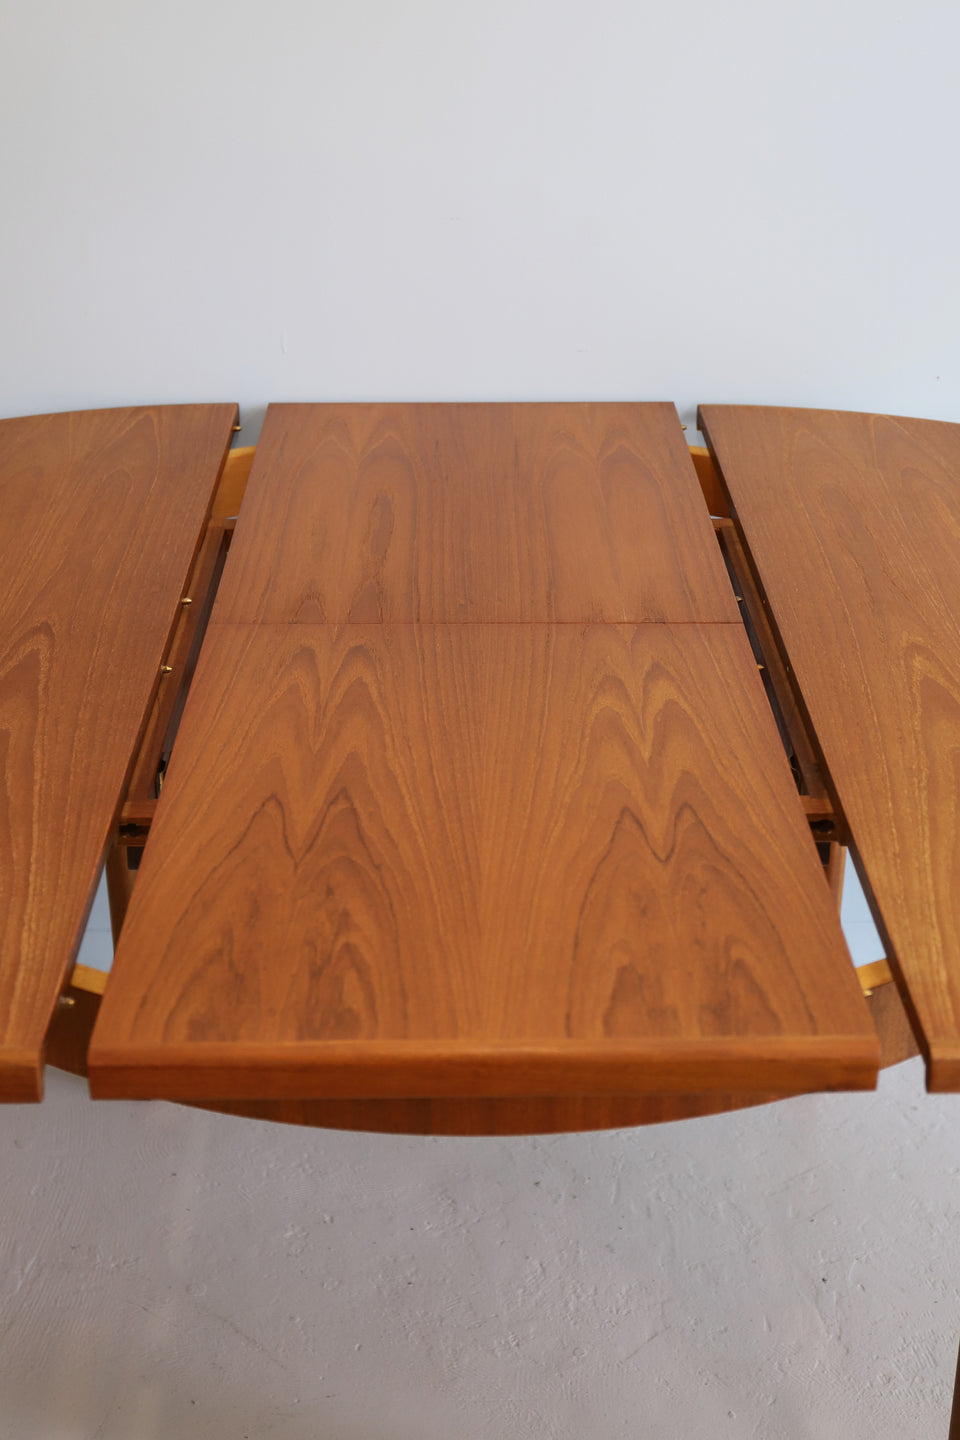 UK Vintage A.H.McINTOSH Round Extension Table/イギリスヴィンテージ マッキントッシュ ラウンド エクステンション ダイニングテーブル チーク材